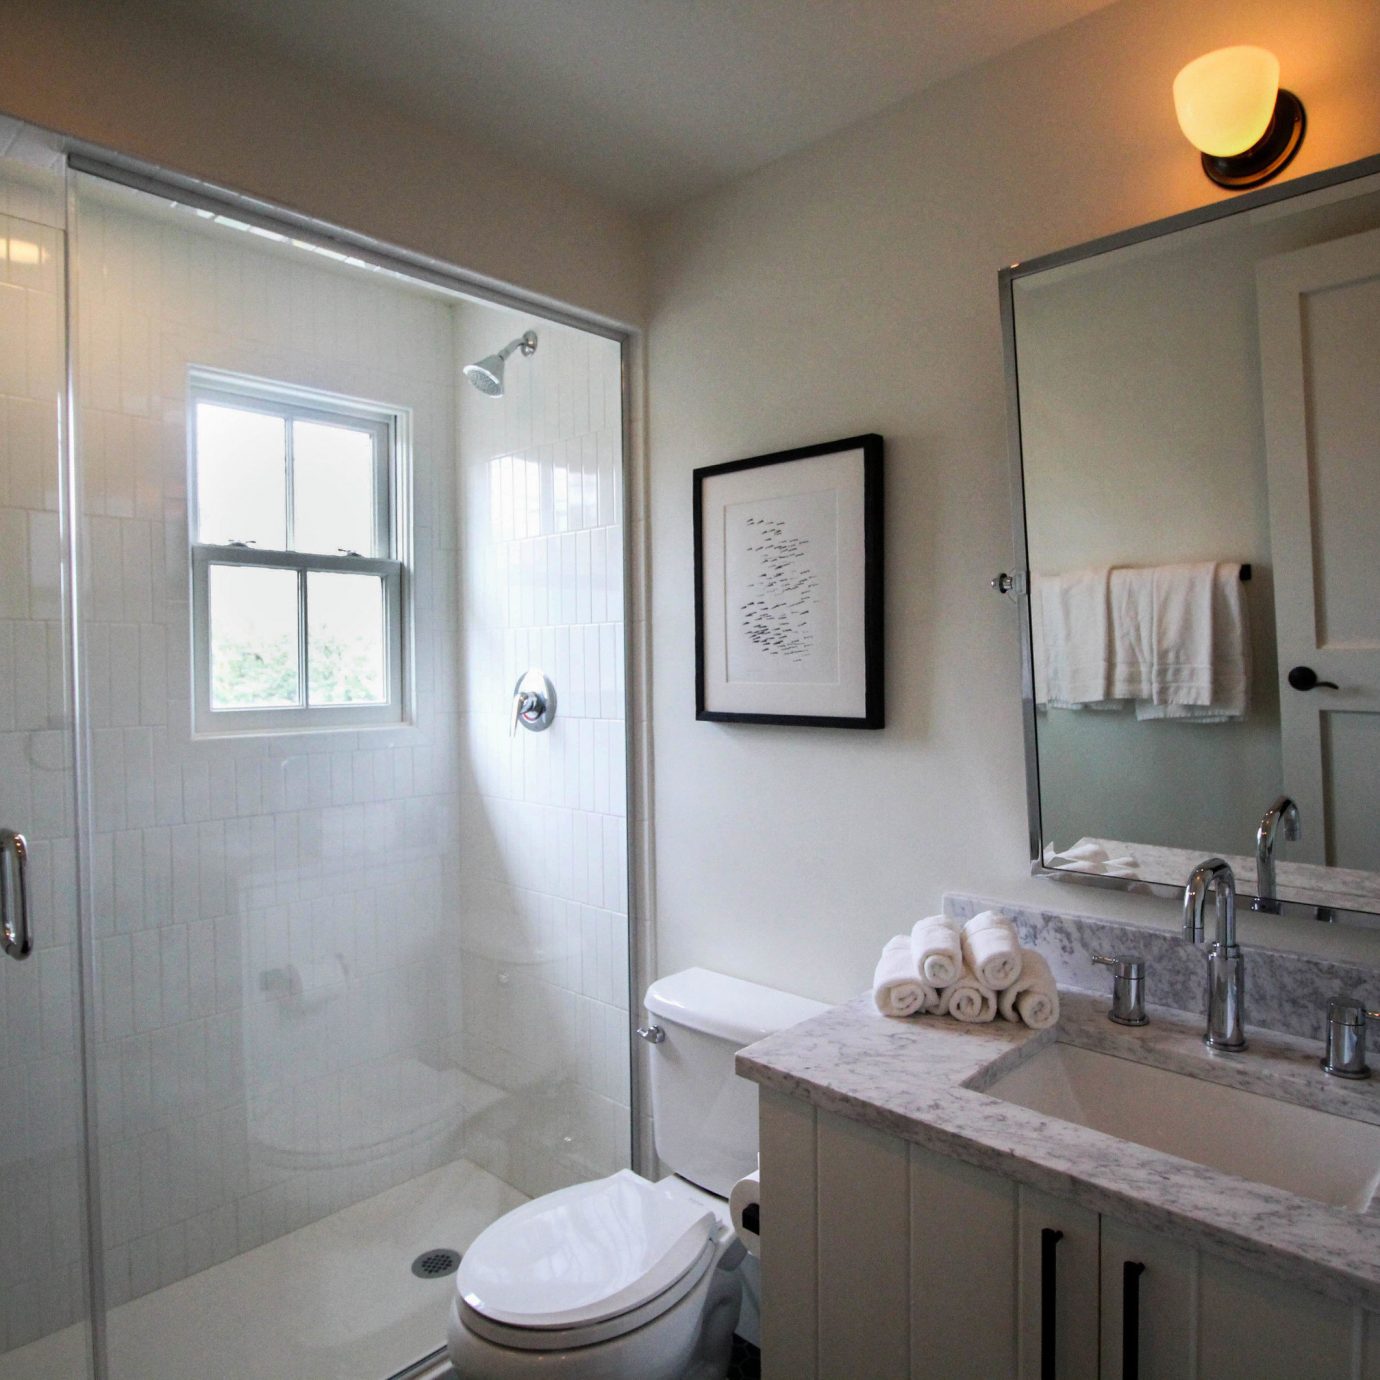 bathroom sink mirror property home cottage rack